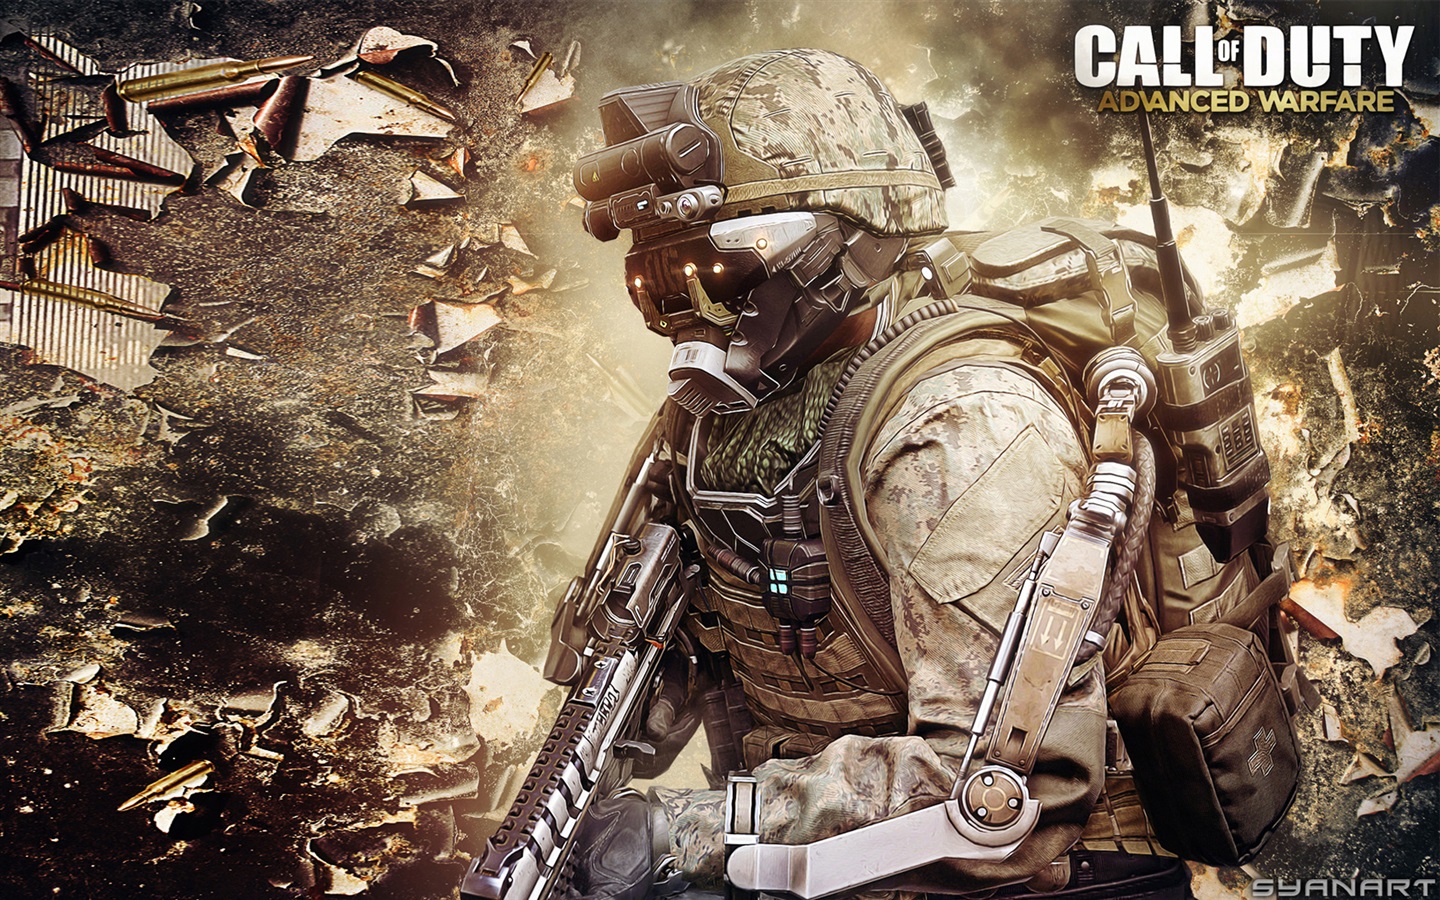  of Duty Advanced Warfare soldier and equipment Wallpaper   1440x900